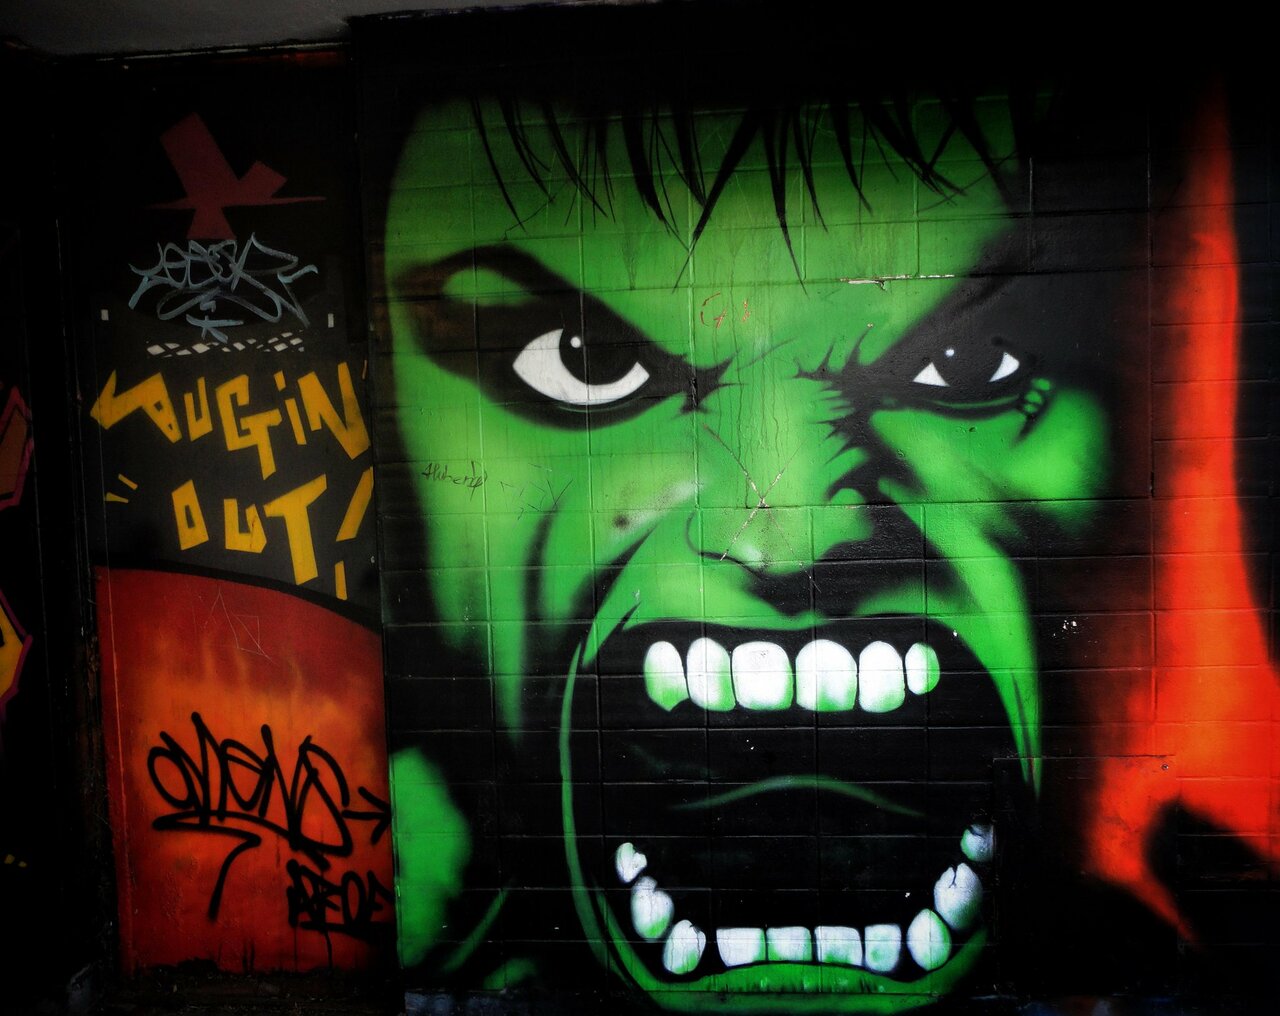 Incredible Hulk subway mural by Omega 

#graffiti #graff #streetart #art #arte #Birmingham #Marvel #Hulk http://t.co/ZTTG8vOyRz